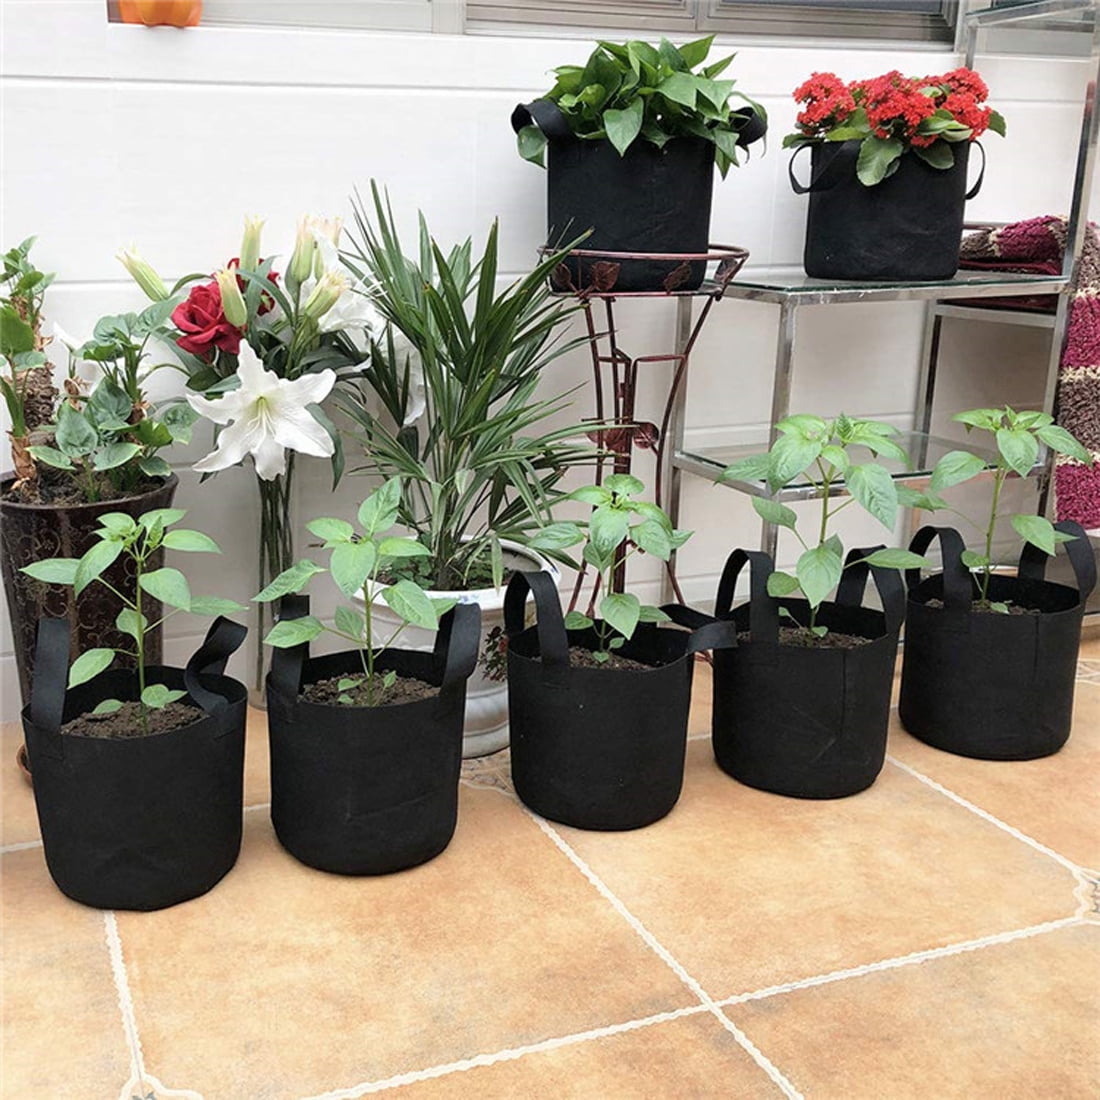 Details about   Potato Grow Bags Tomato Plant Bags Home Garden Vegetable Planter Container Pot 